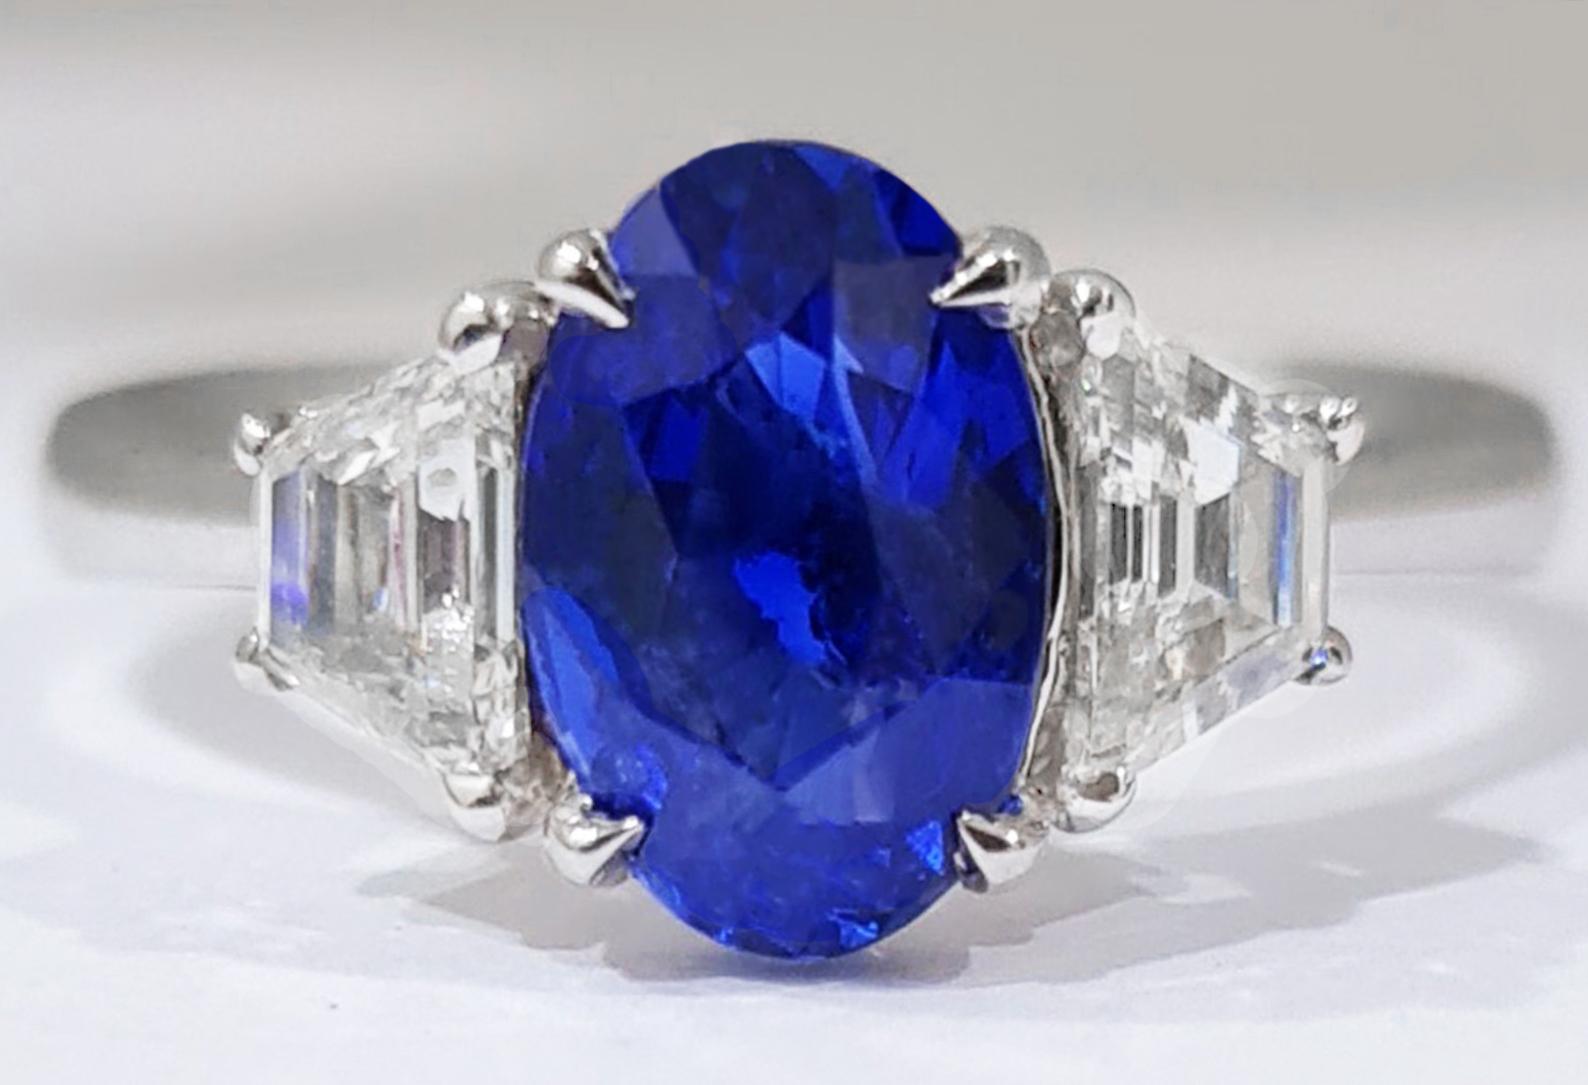 2 carat blue sapphire